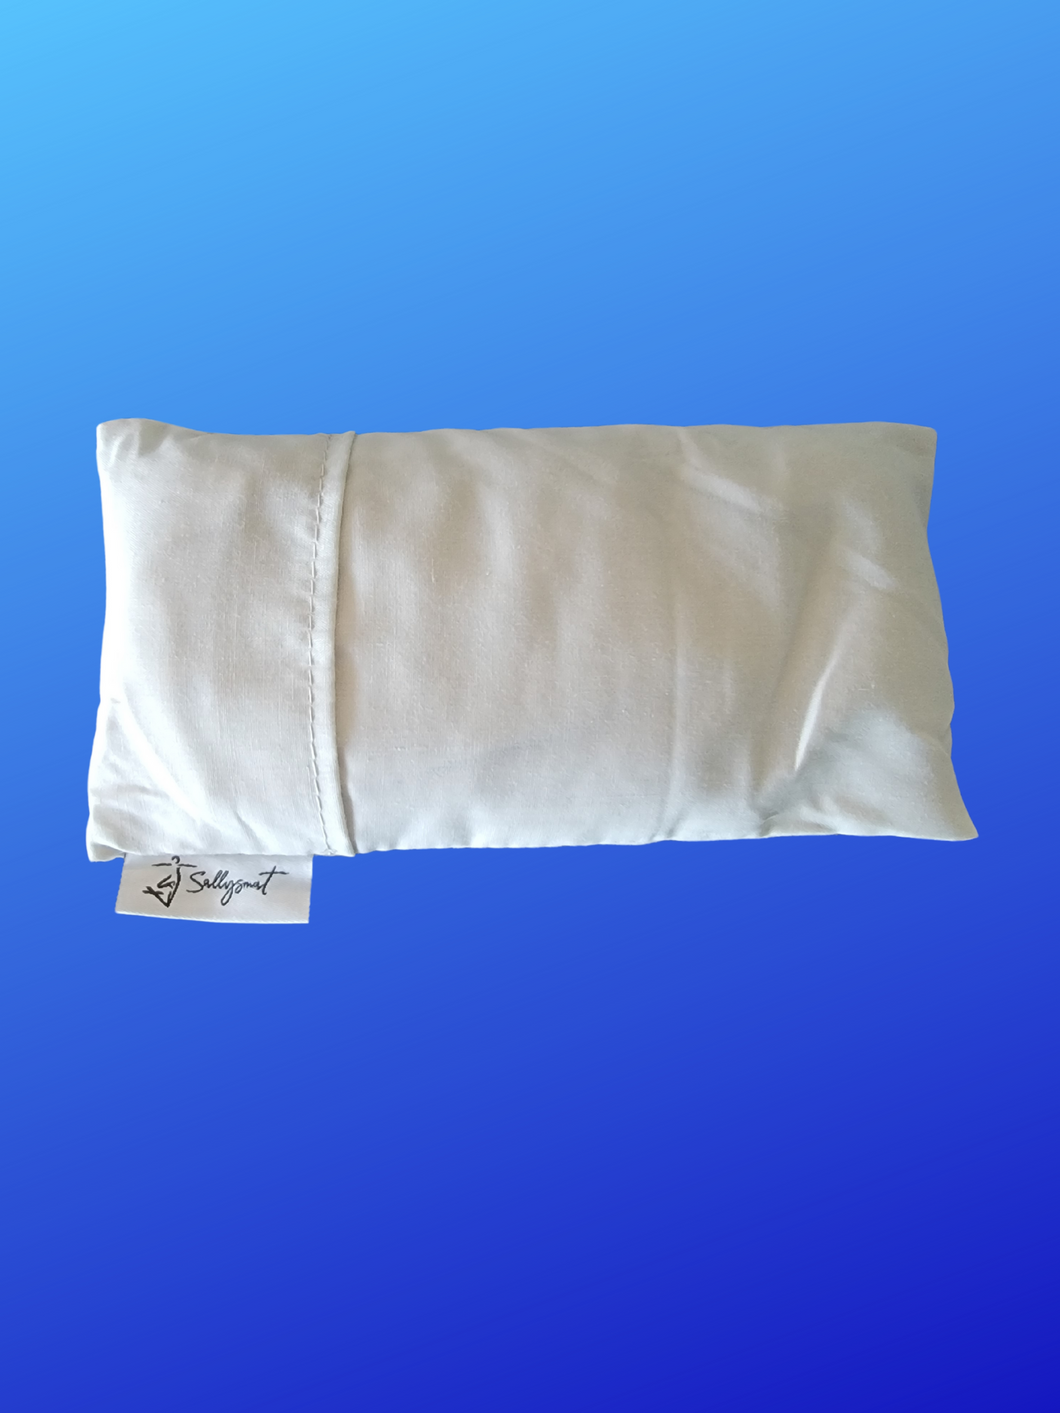 Wholesale Sallysmat Instructor Eye Pillow Bundle